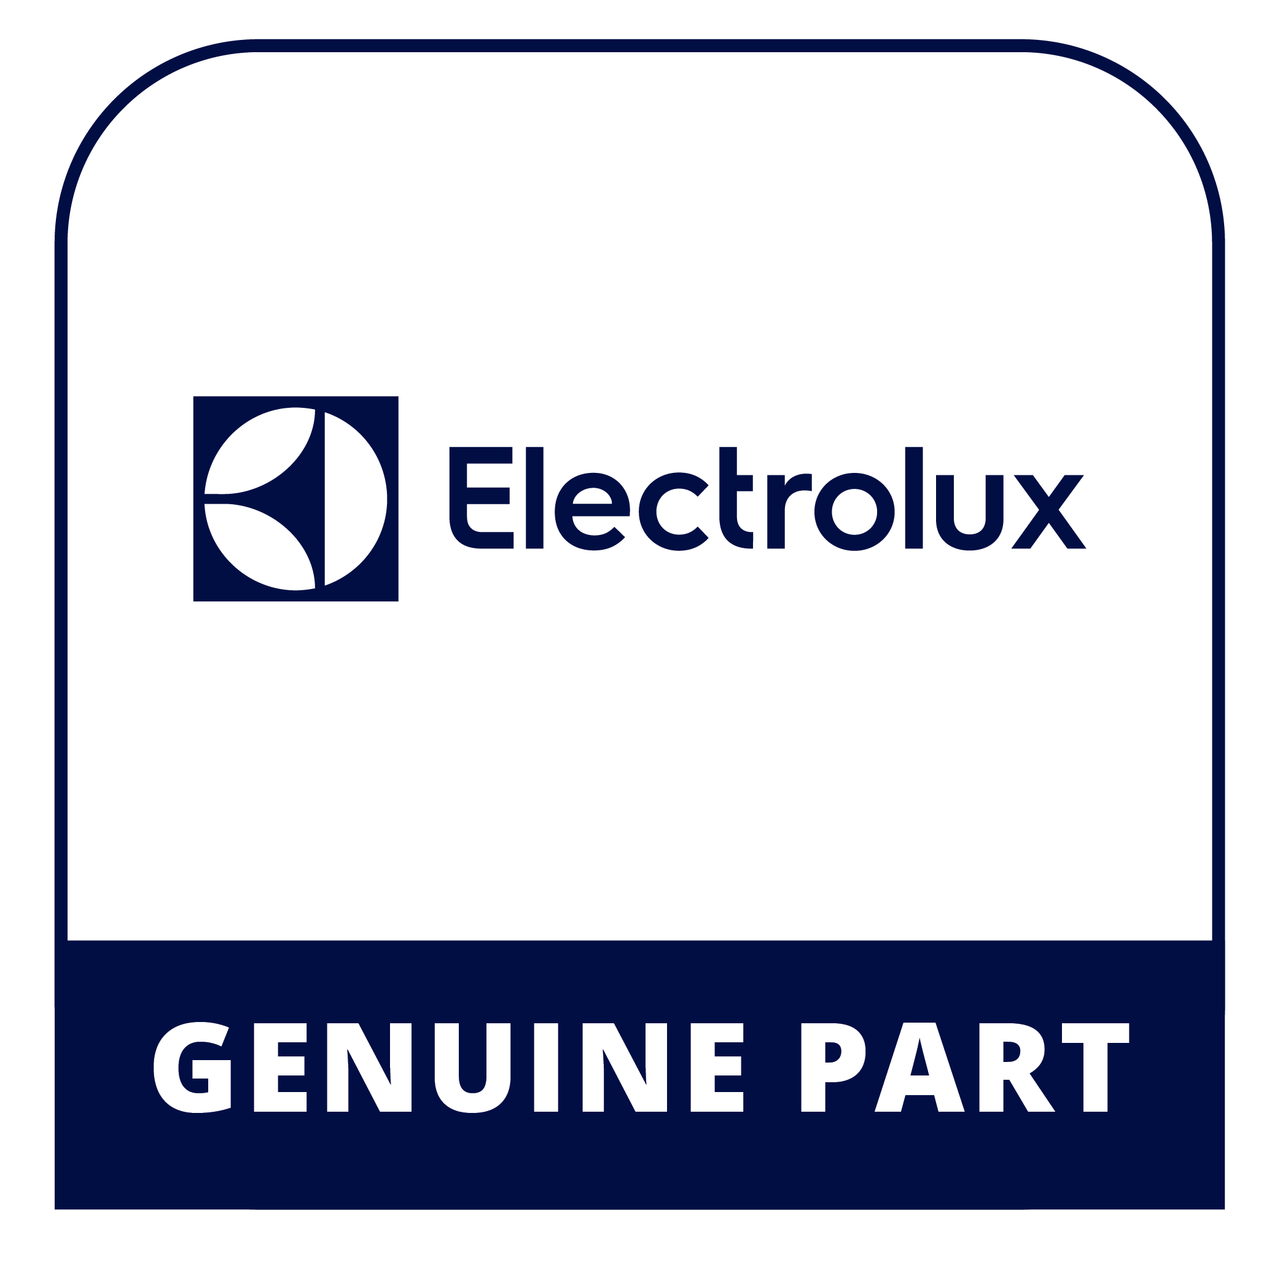 Frigidaire - Electrolux 5304508633 Energy Guide Label - Genuine Electrolux Part